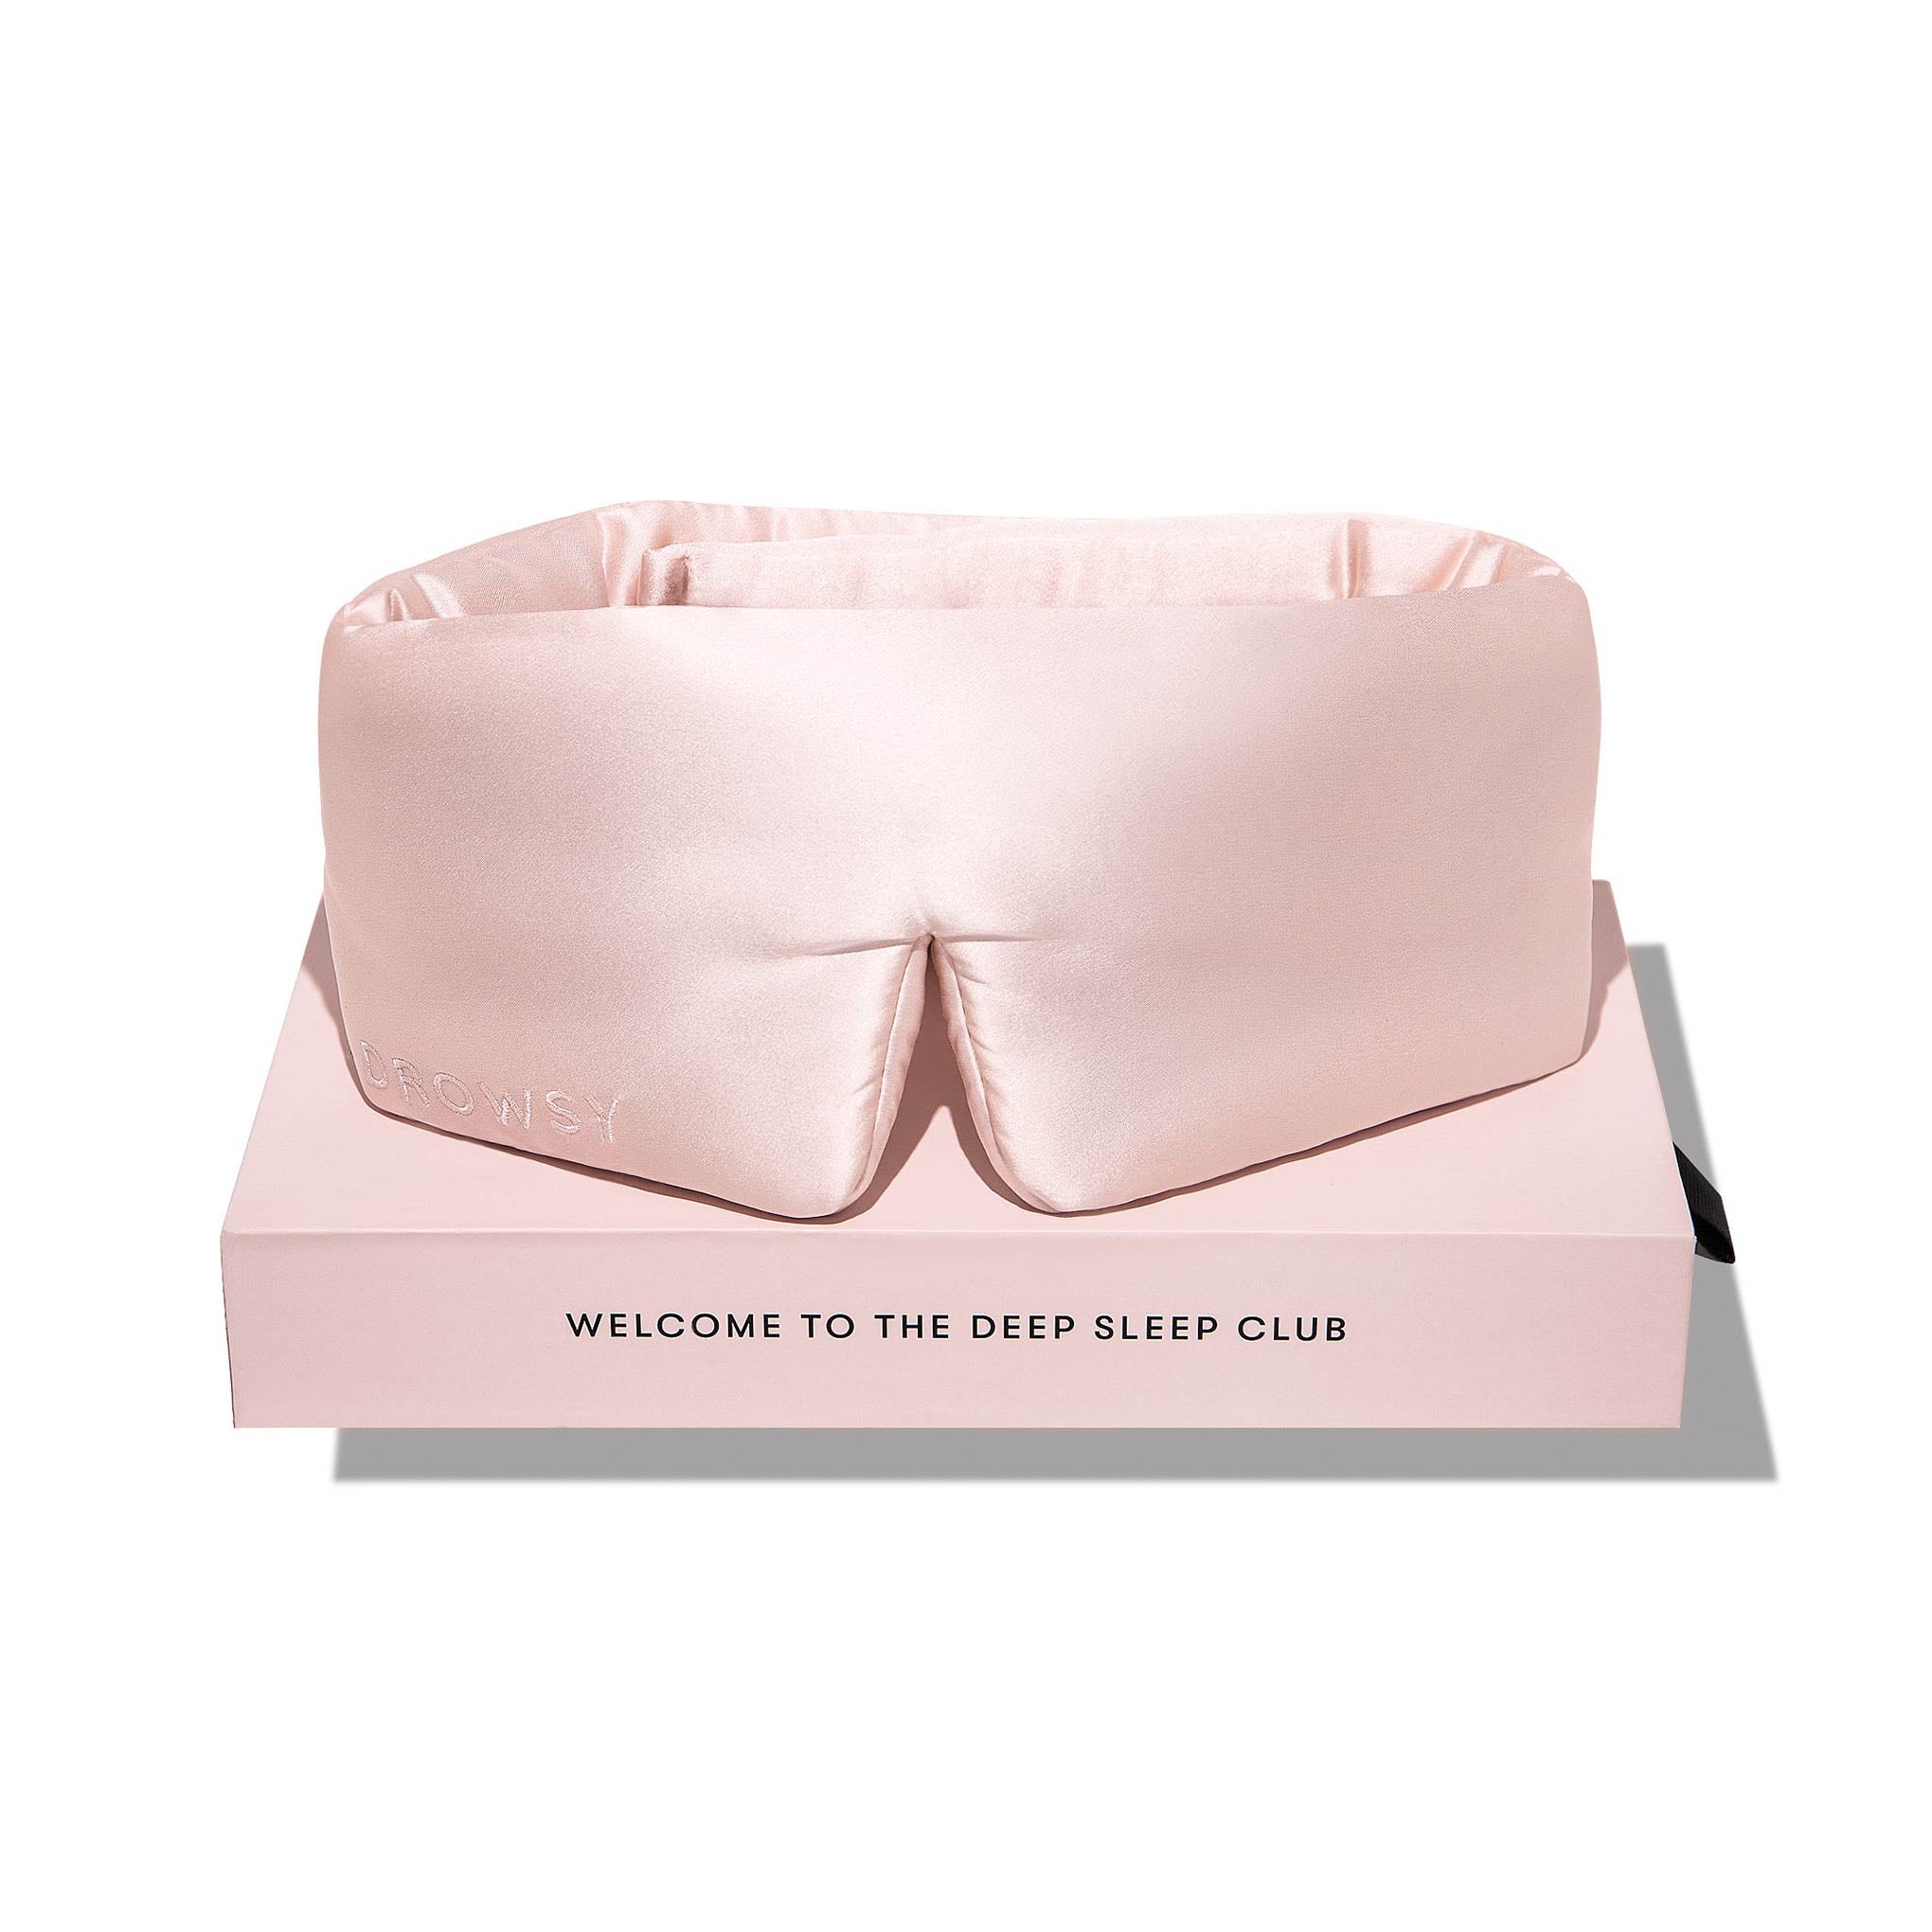 Silk Sleeping Mask - Rose / Light Pink, Luxury and Comfort